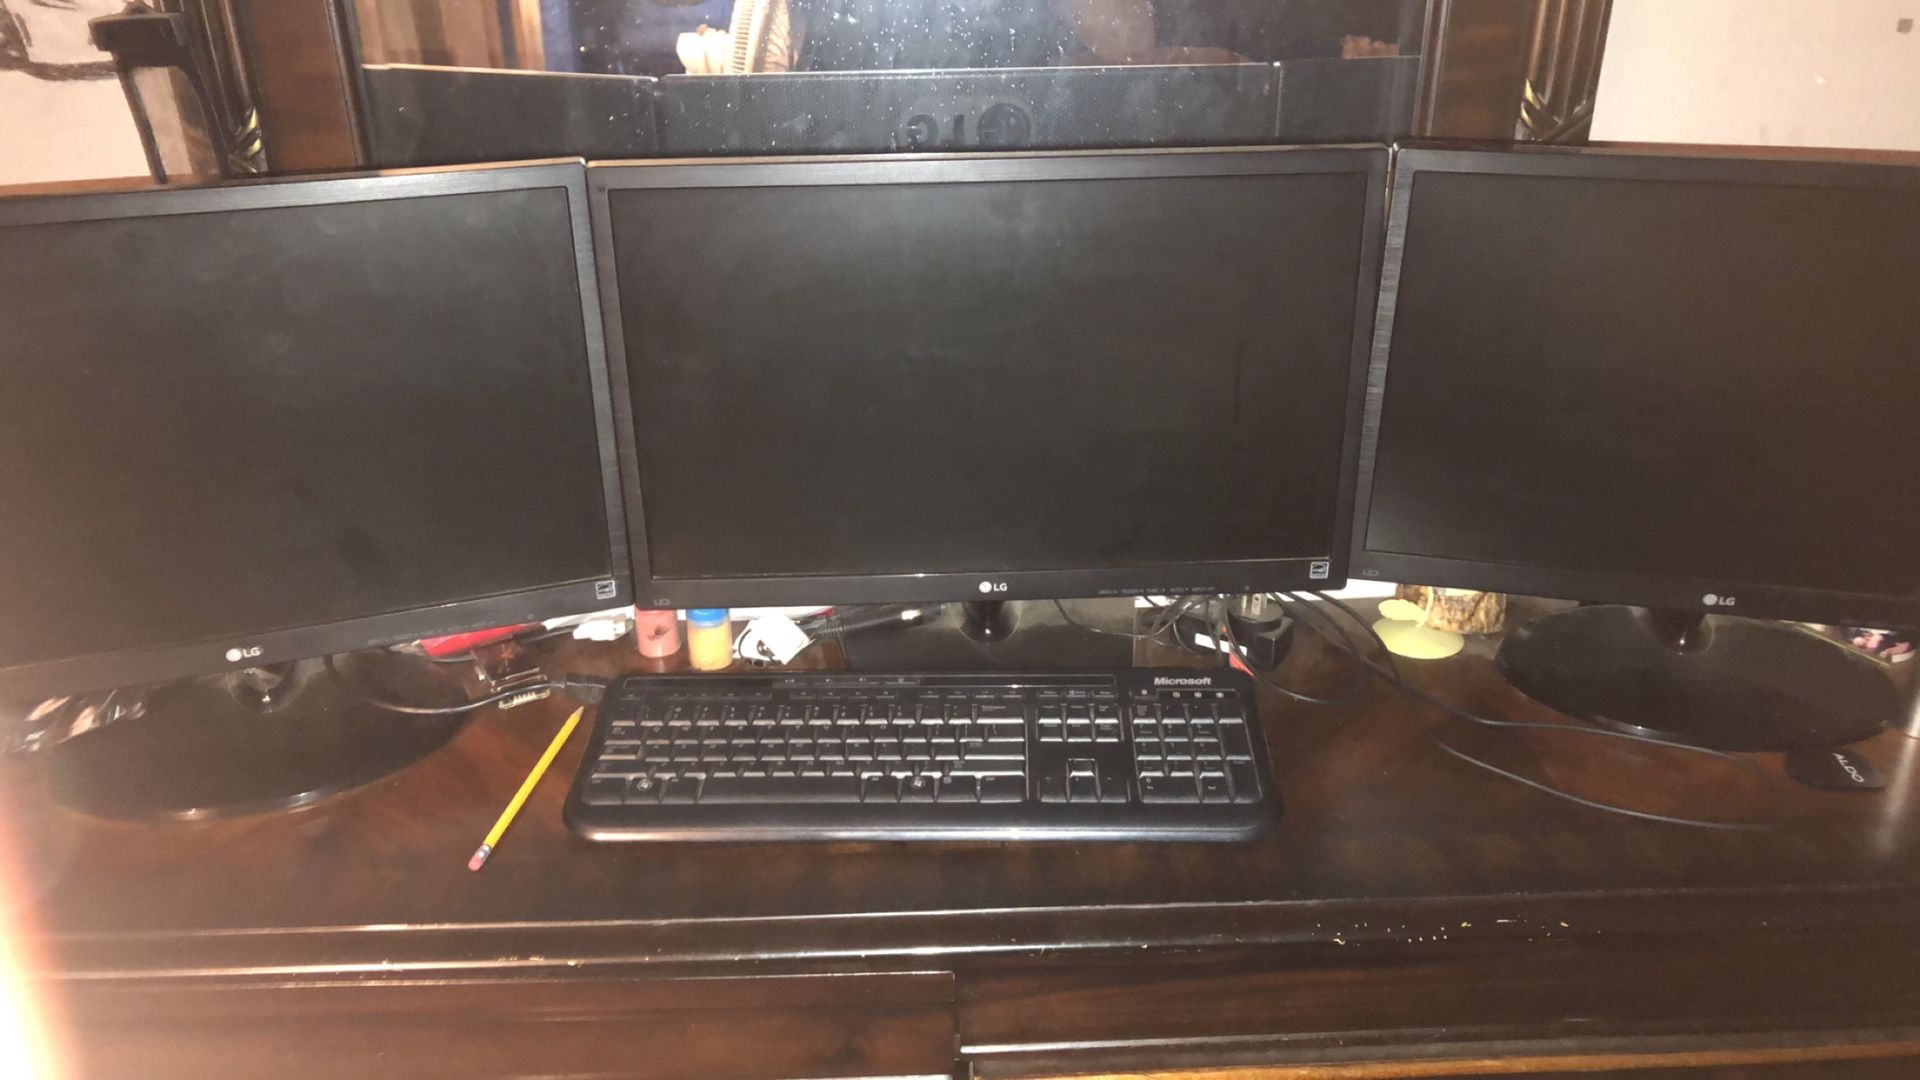 LG Computer monitors